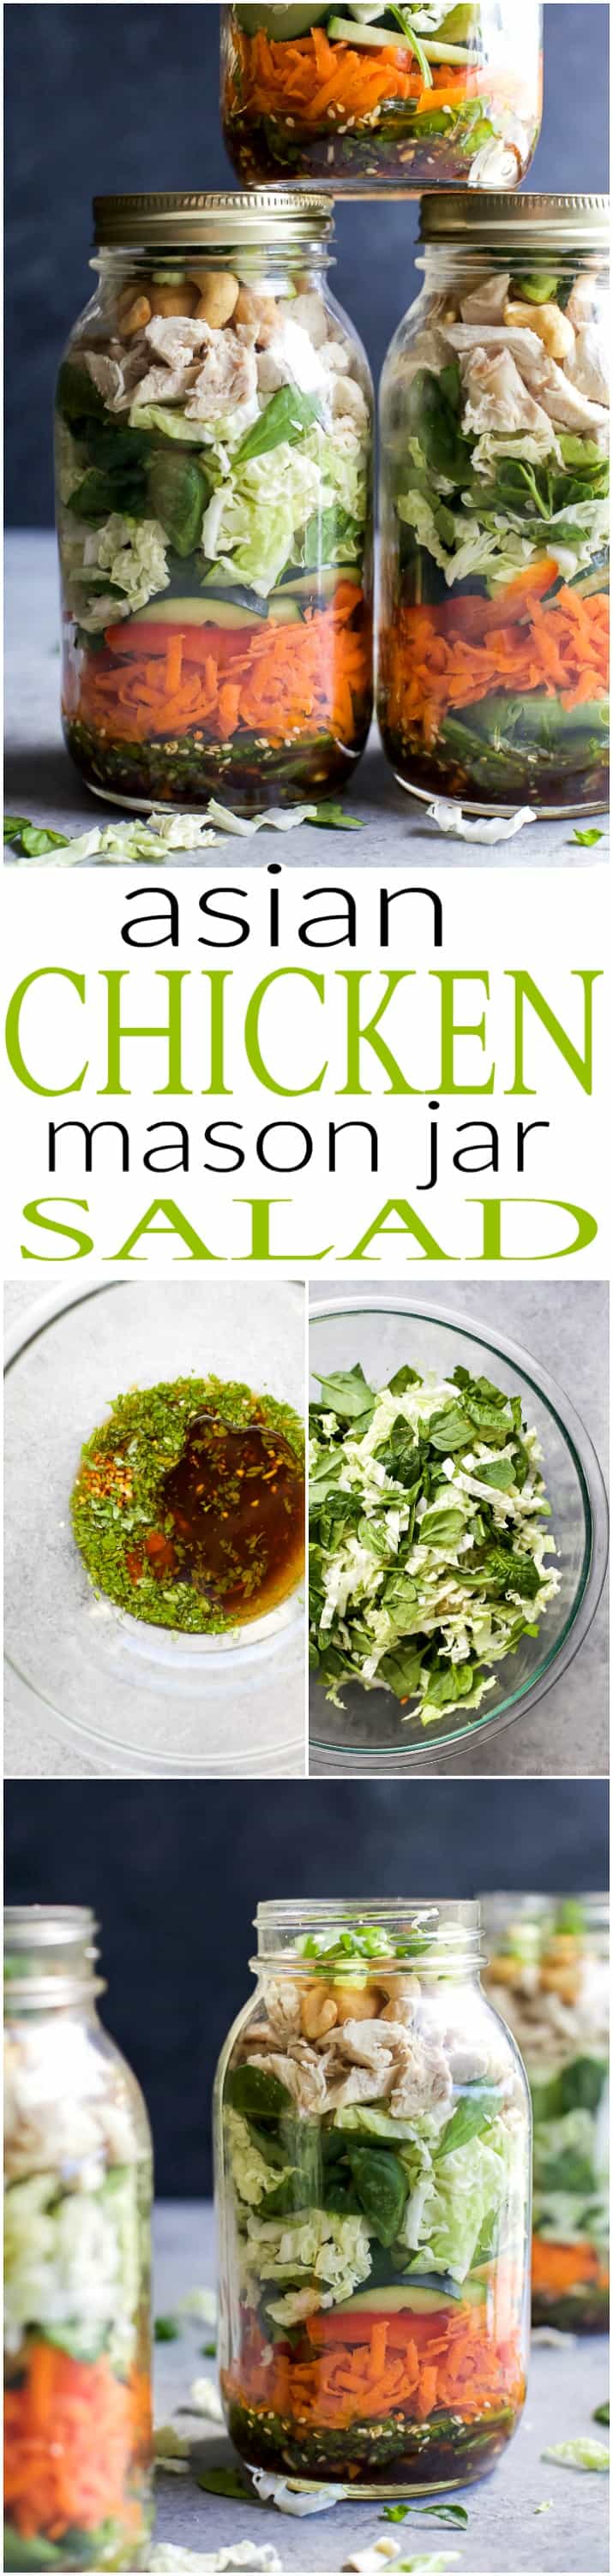 Pinterest image for Asian Chicken Mason Jar Salad